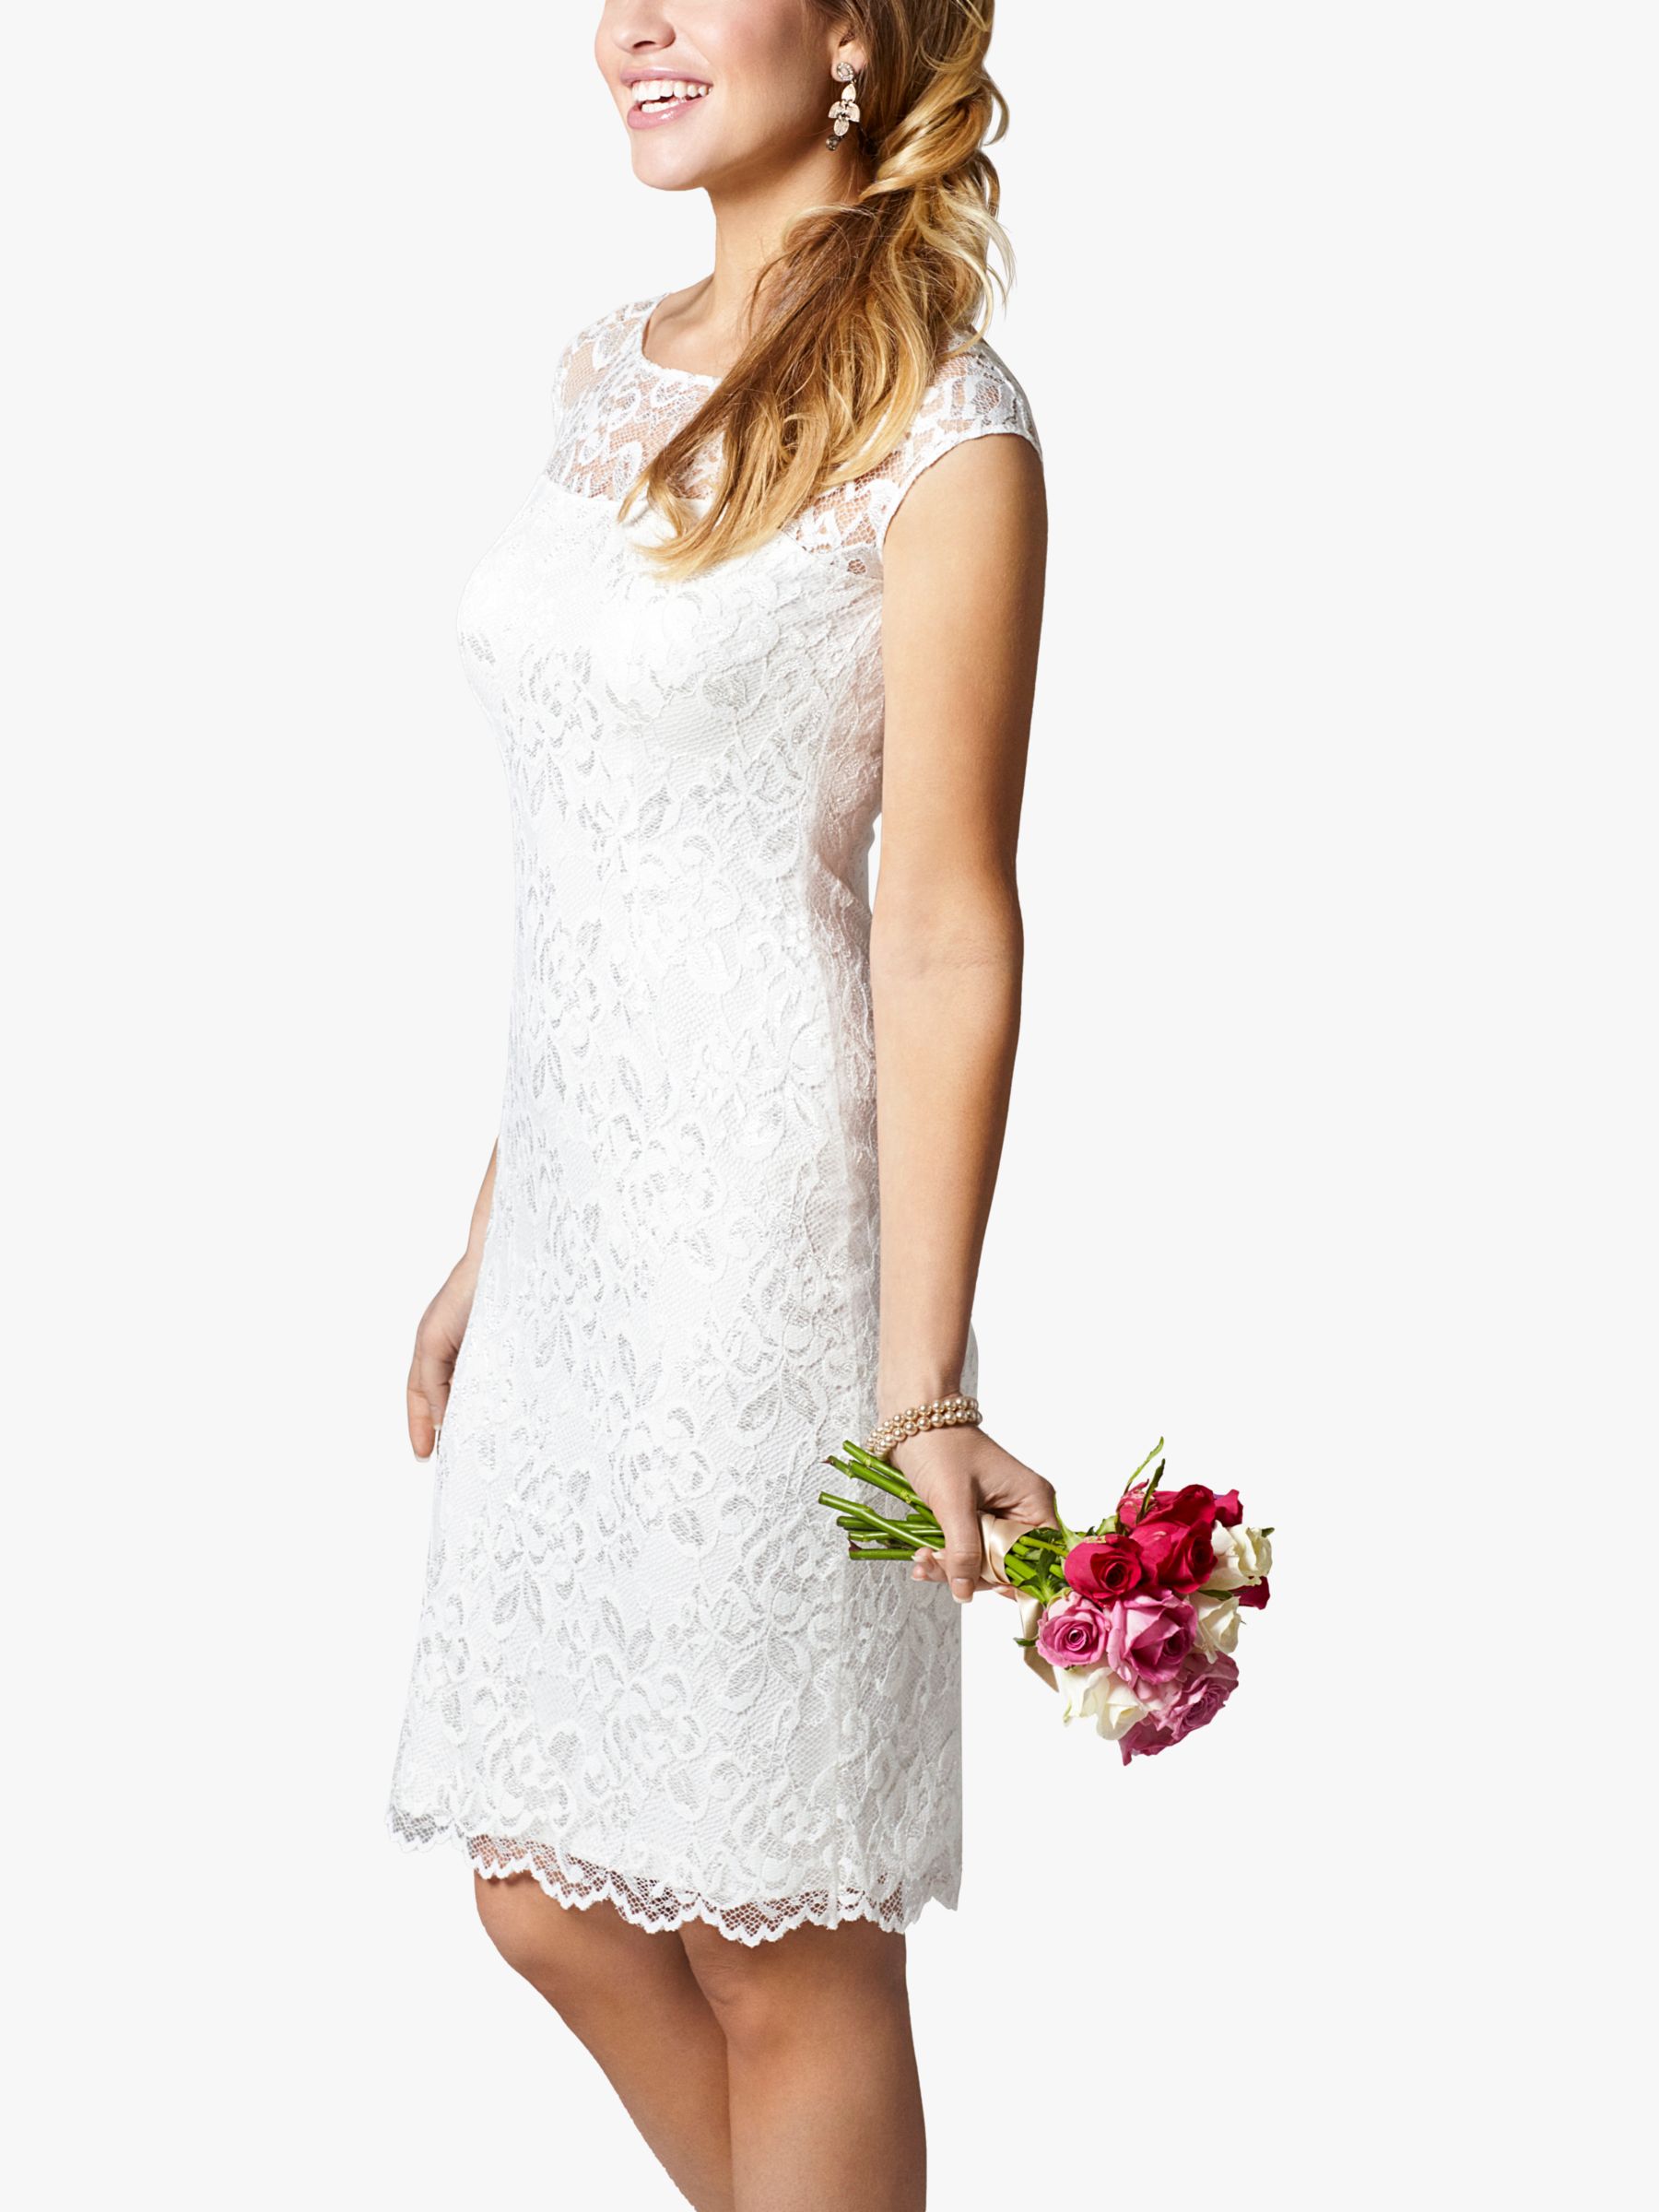 Alie Street Amber Floral Lace Knee Length Wedding Dress, Ivory, 6-8